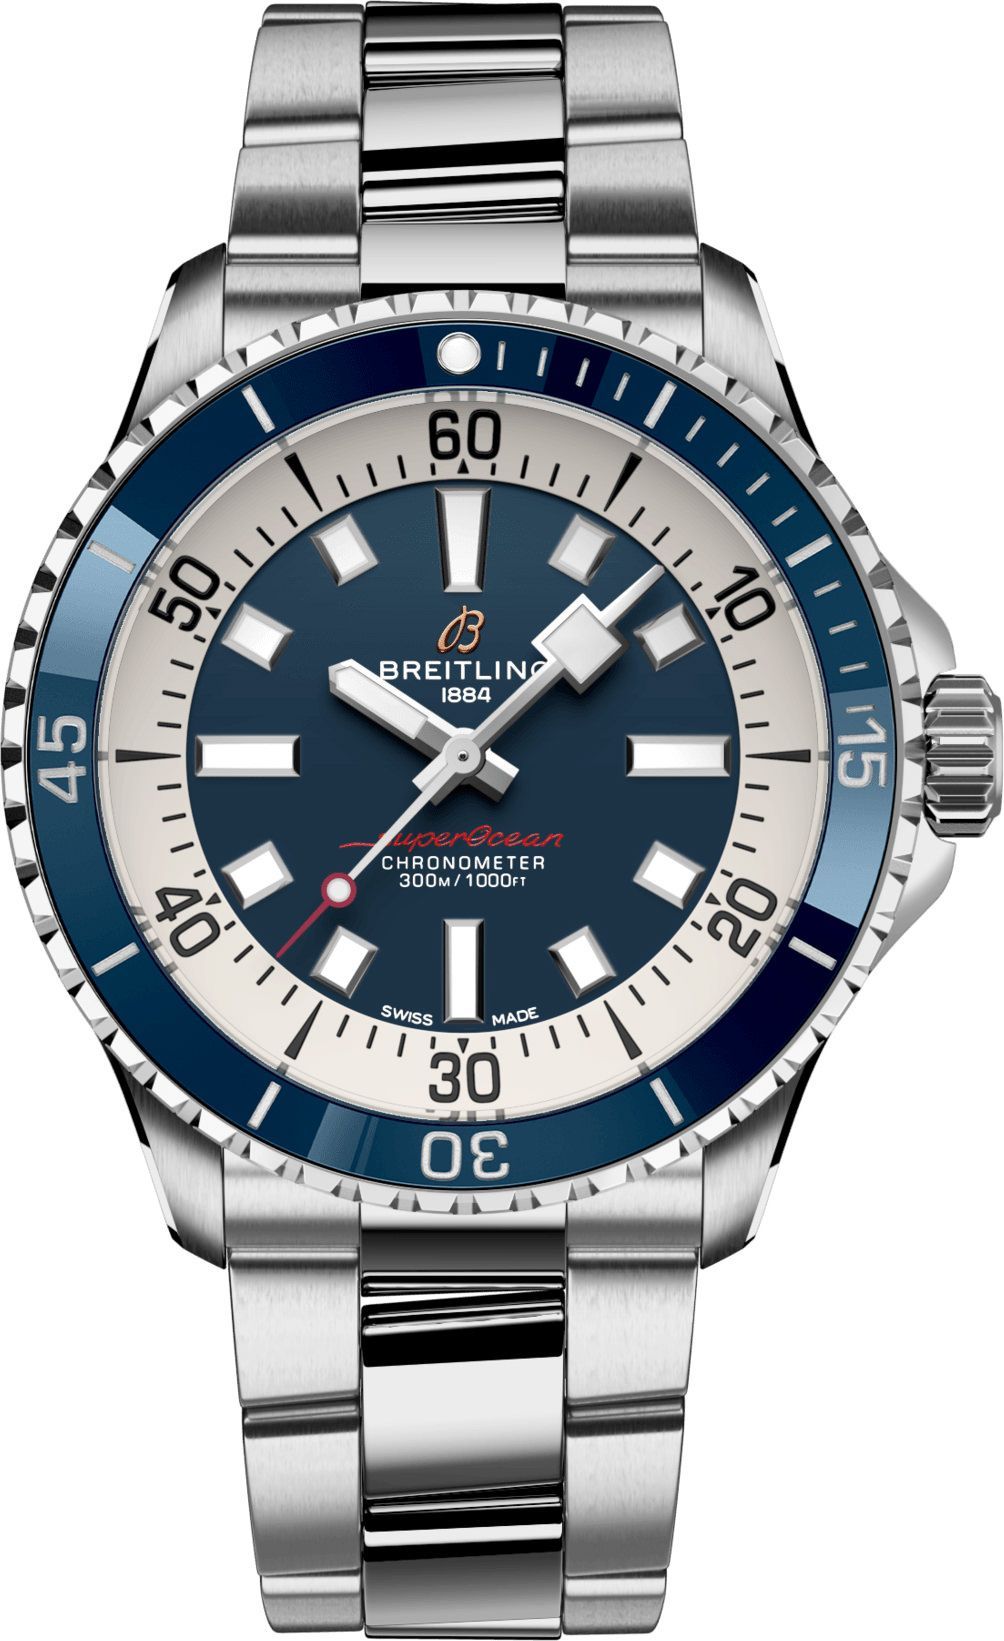 Breitling Superocean 42 mm Watch in Blue Dial